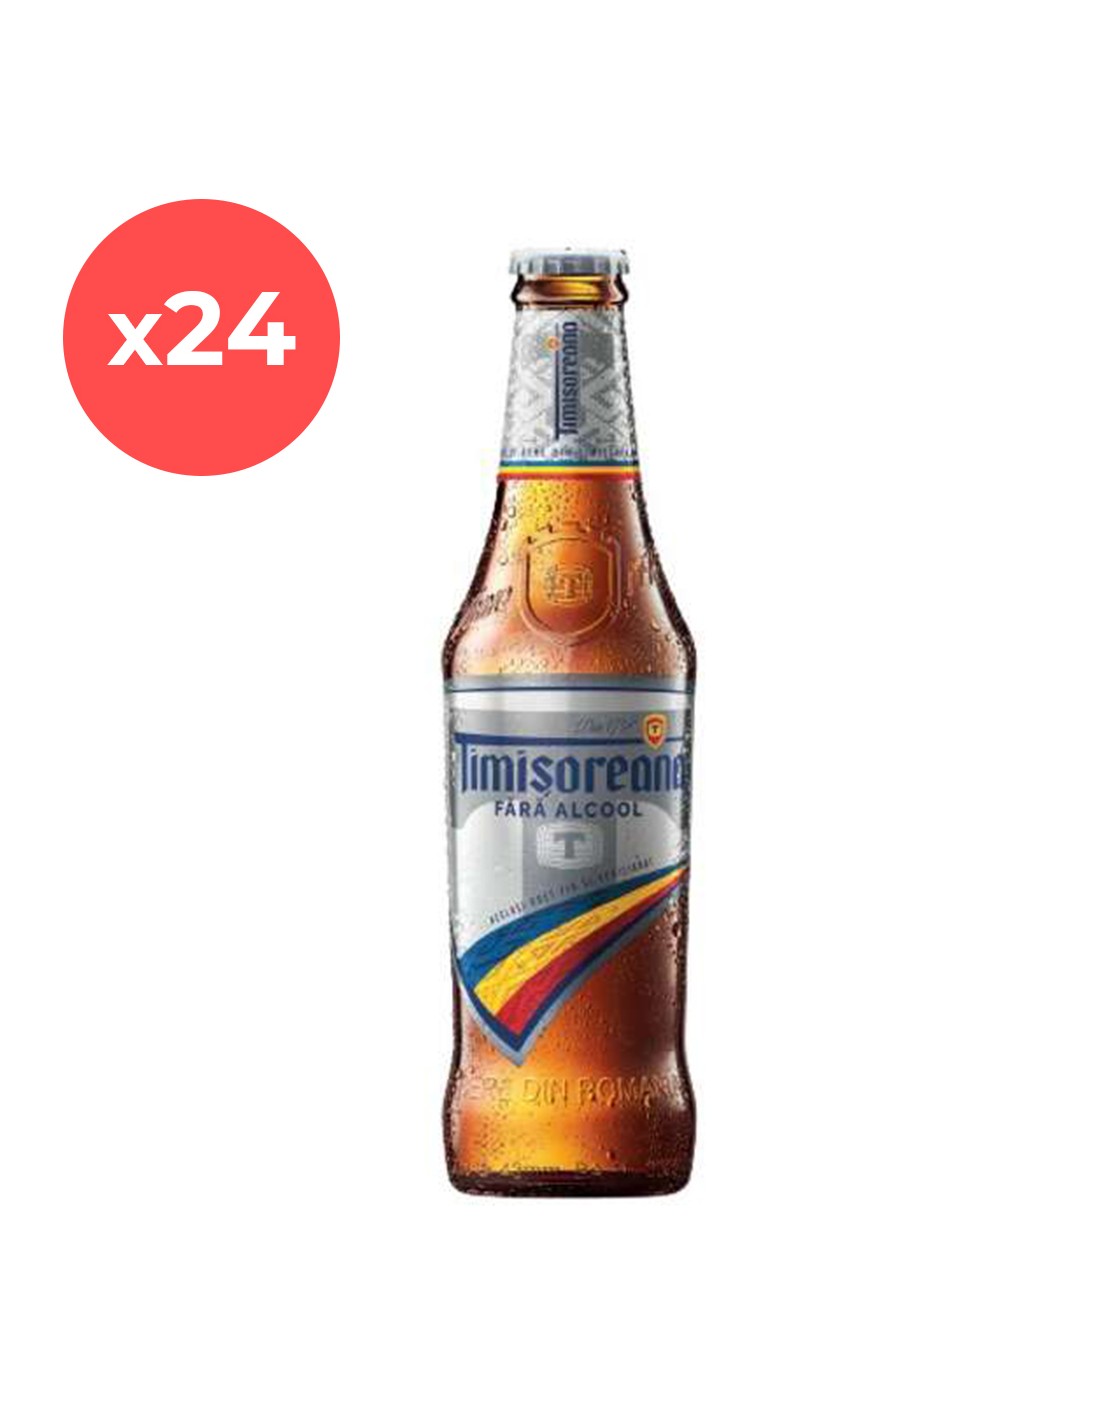 Bax 24 bucati bere blonda fara alcool Timisoreana, 0% alc., 0.33L, sticla, Romania